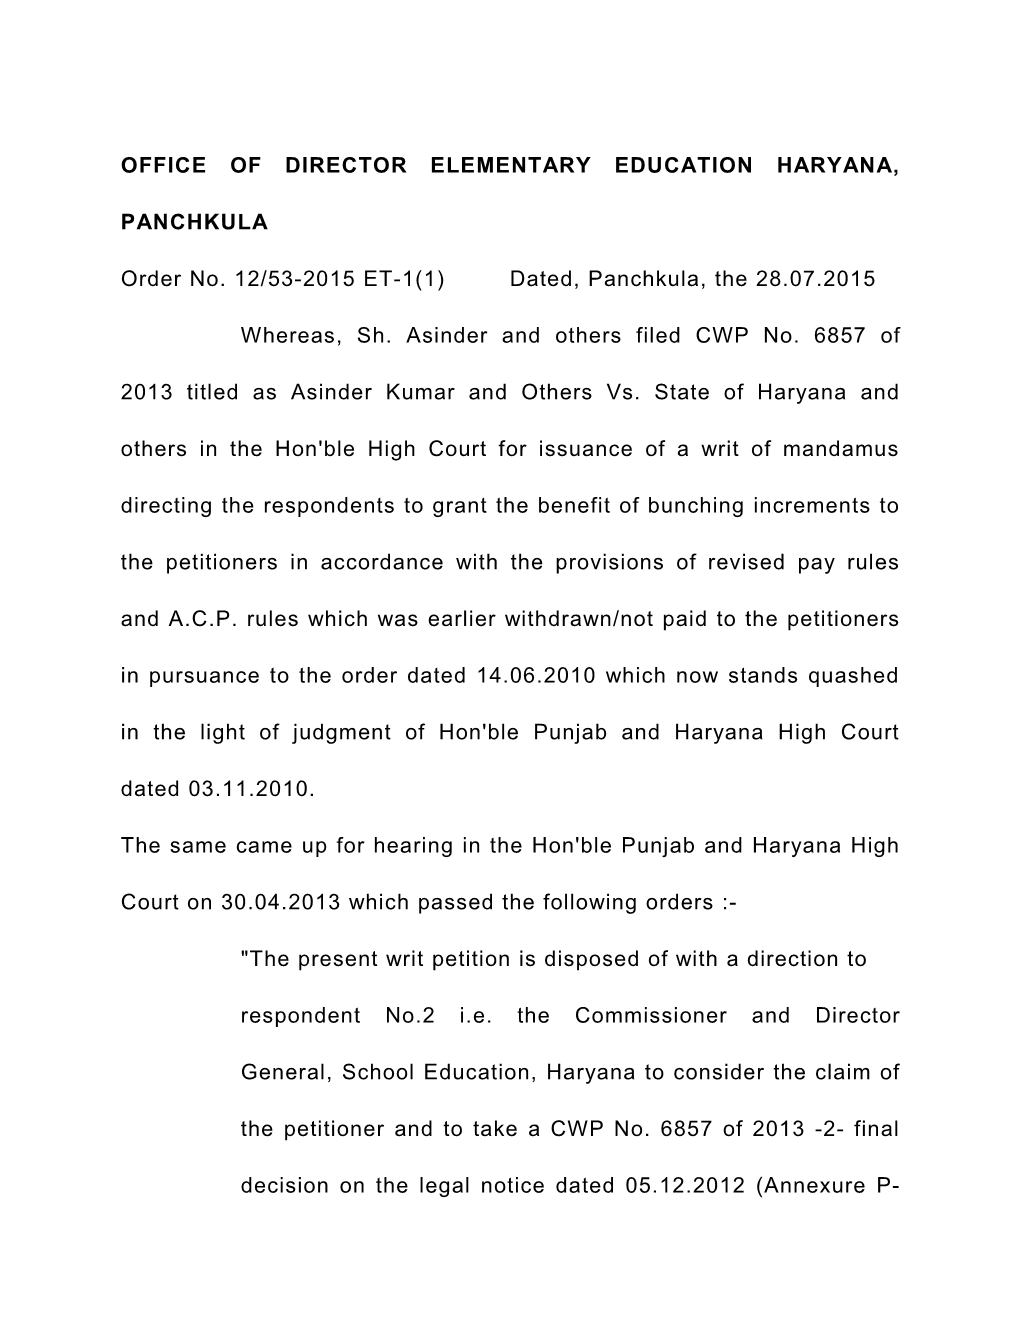 Office of Director Elementary Education Haryana, Panchkula